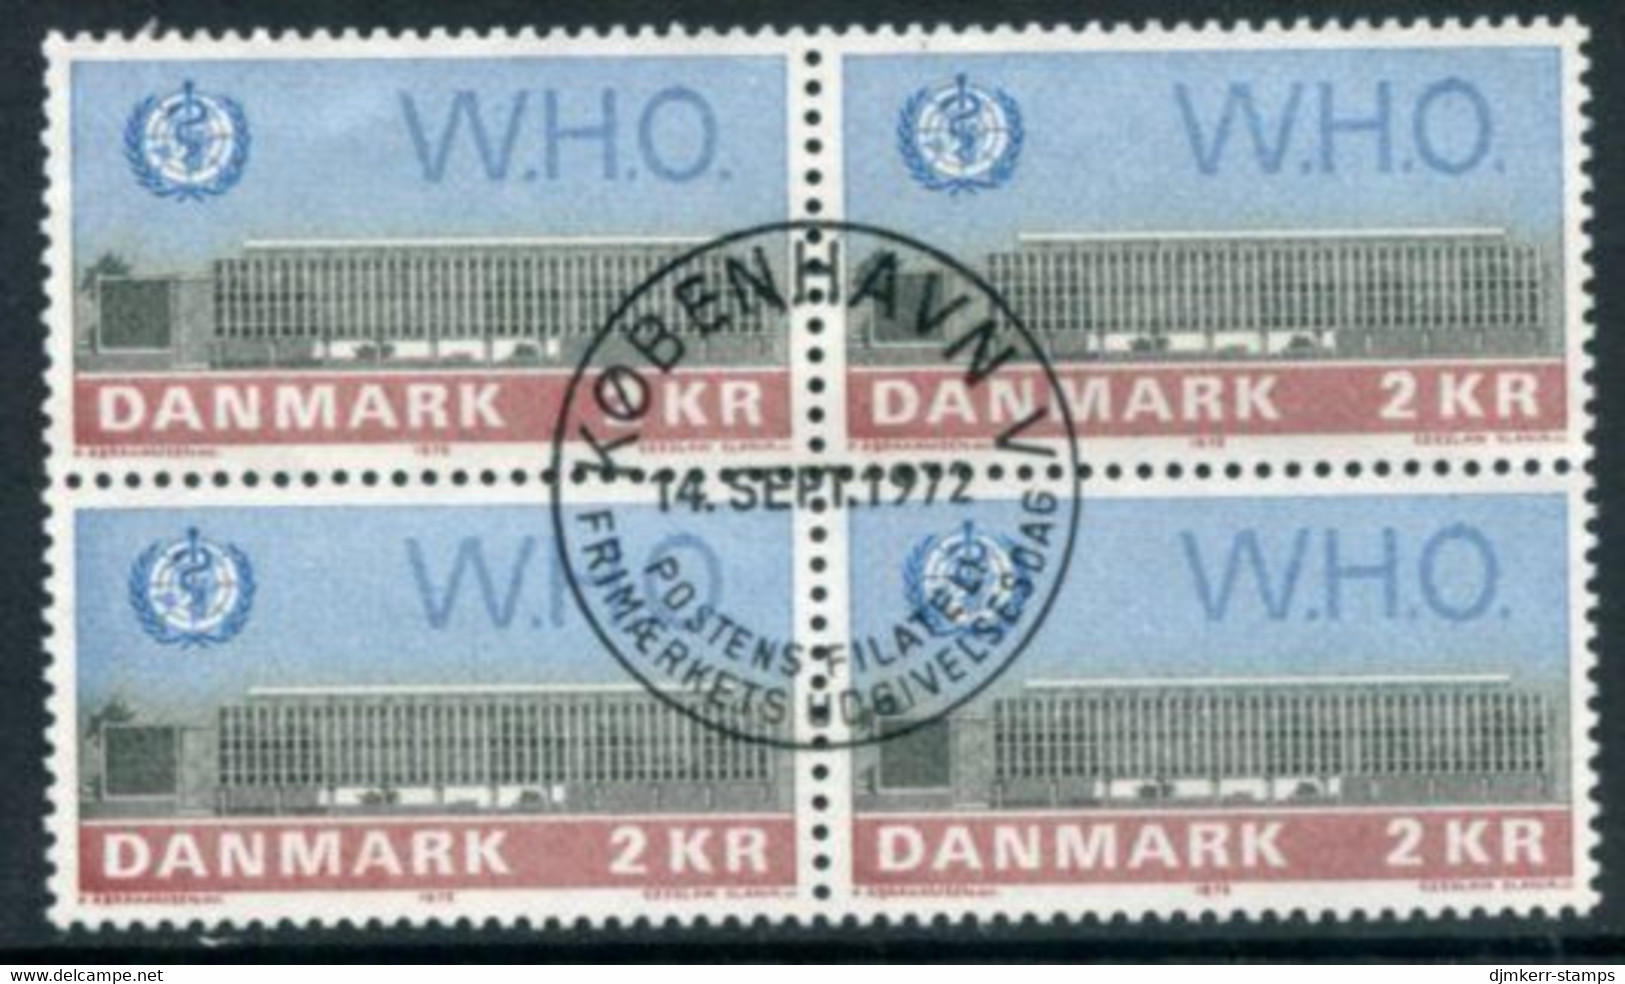 DENMARK 1972 WHO Headquarters. Block Of 4 Used   Michel 531 - Usado